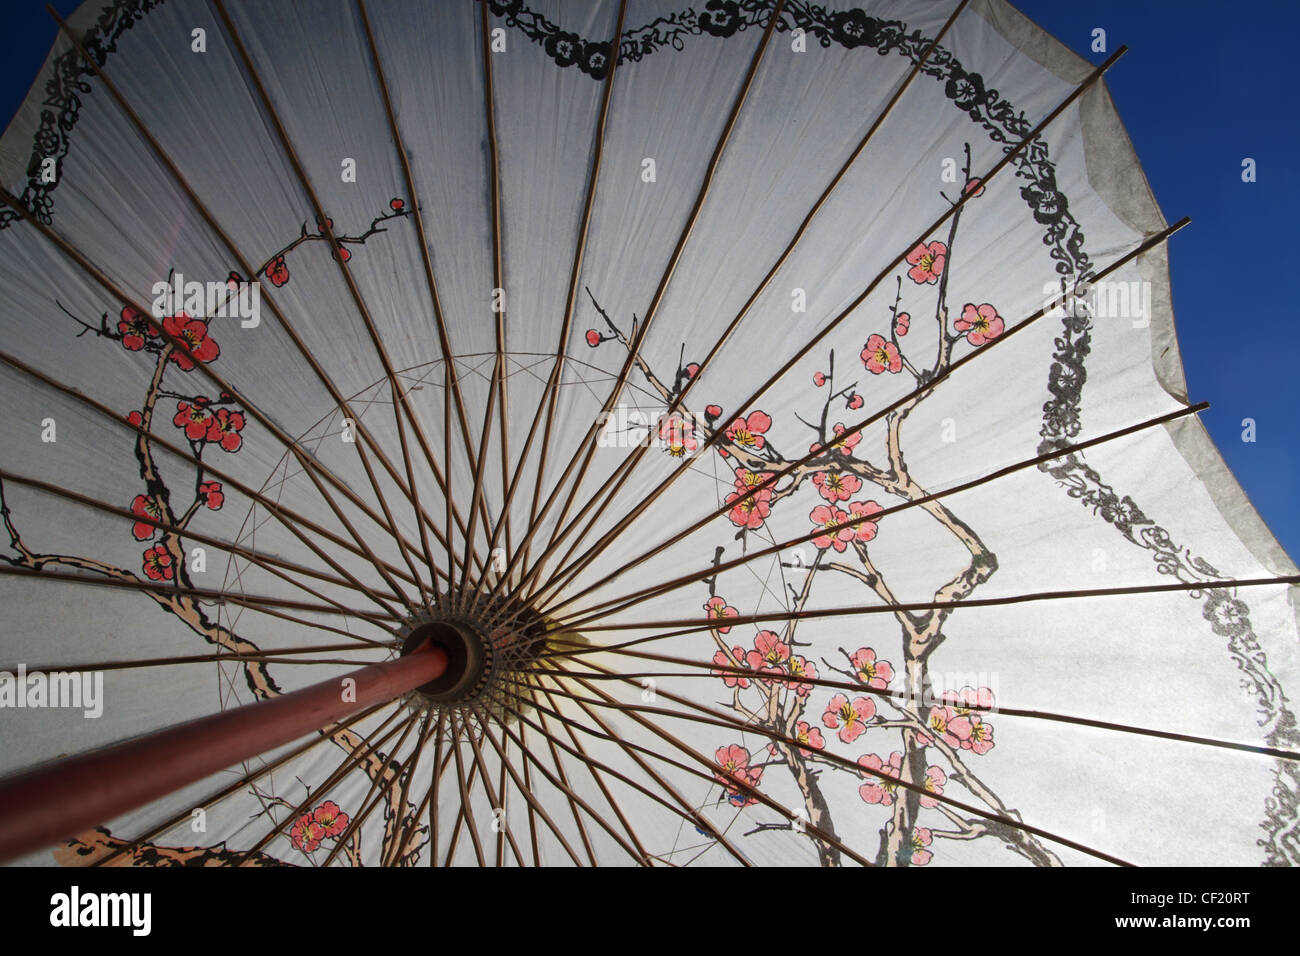 Asia blanco sombra Sombrilla o Paraguas con diseño de flor de cerezo Foto de stock